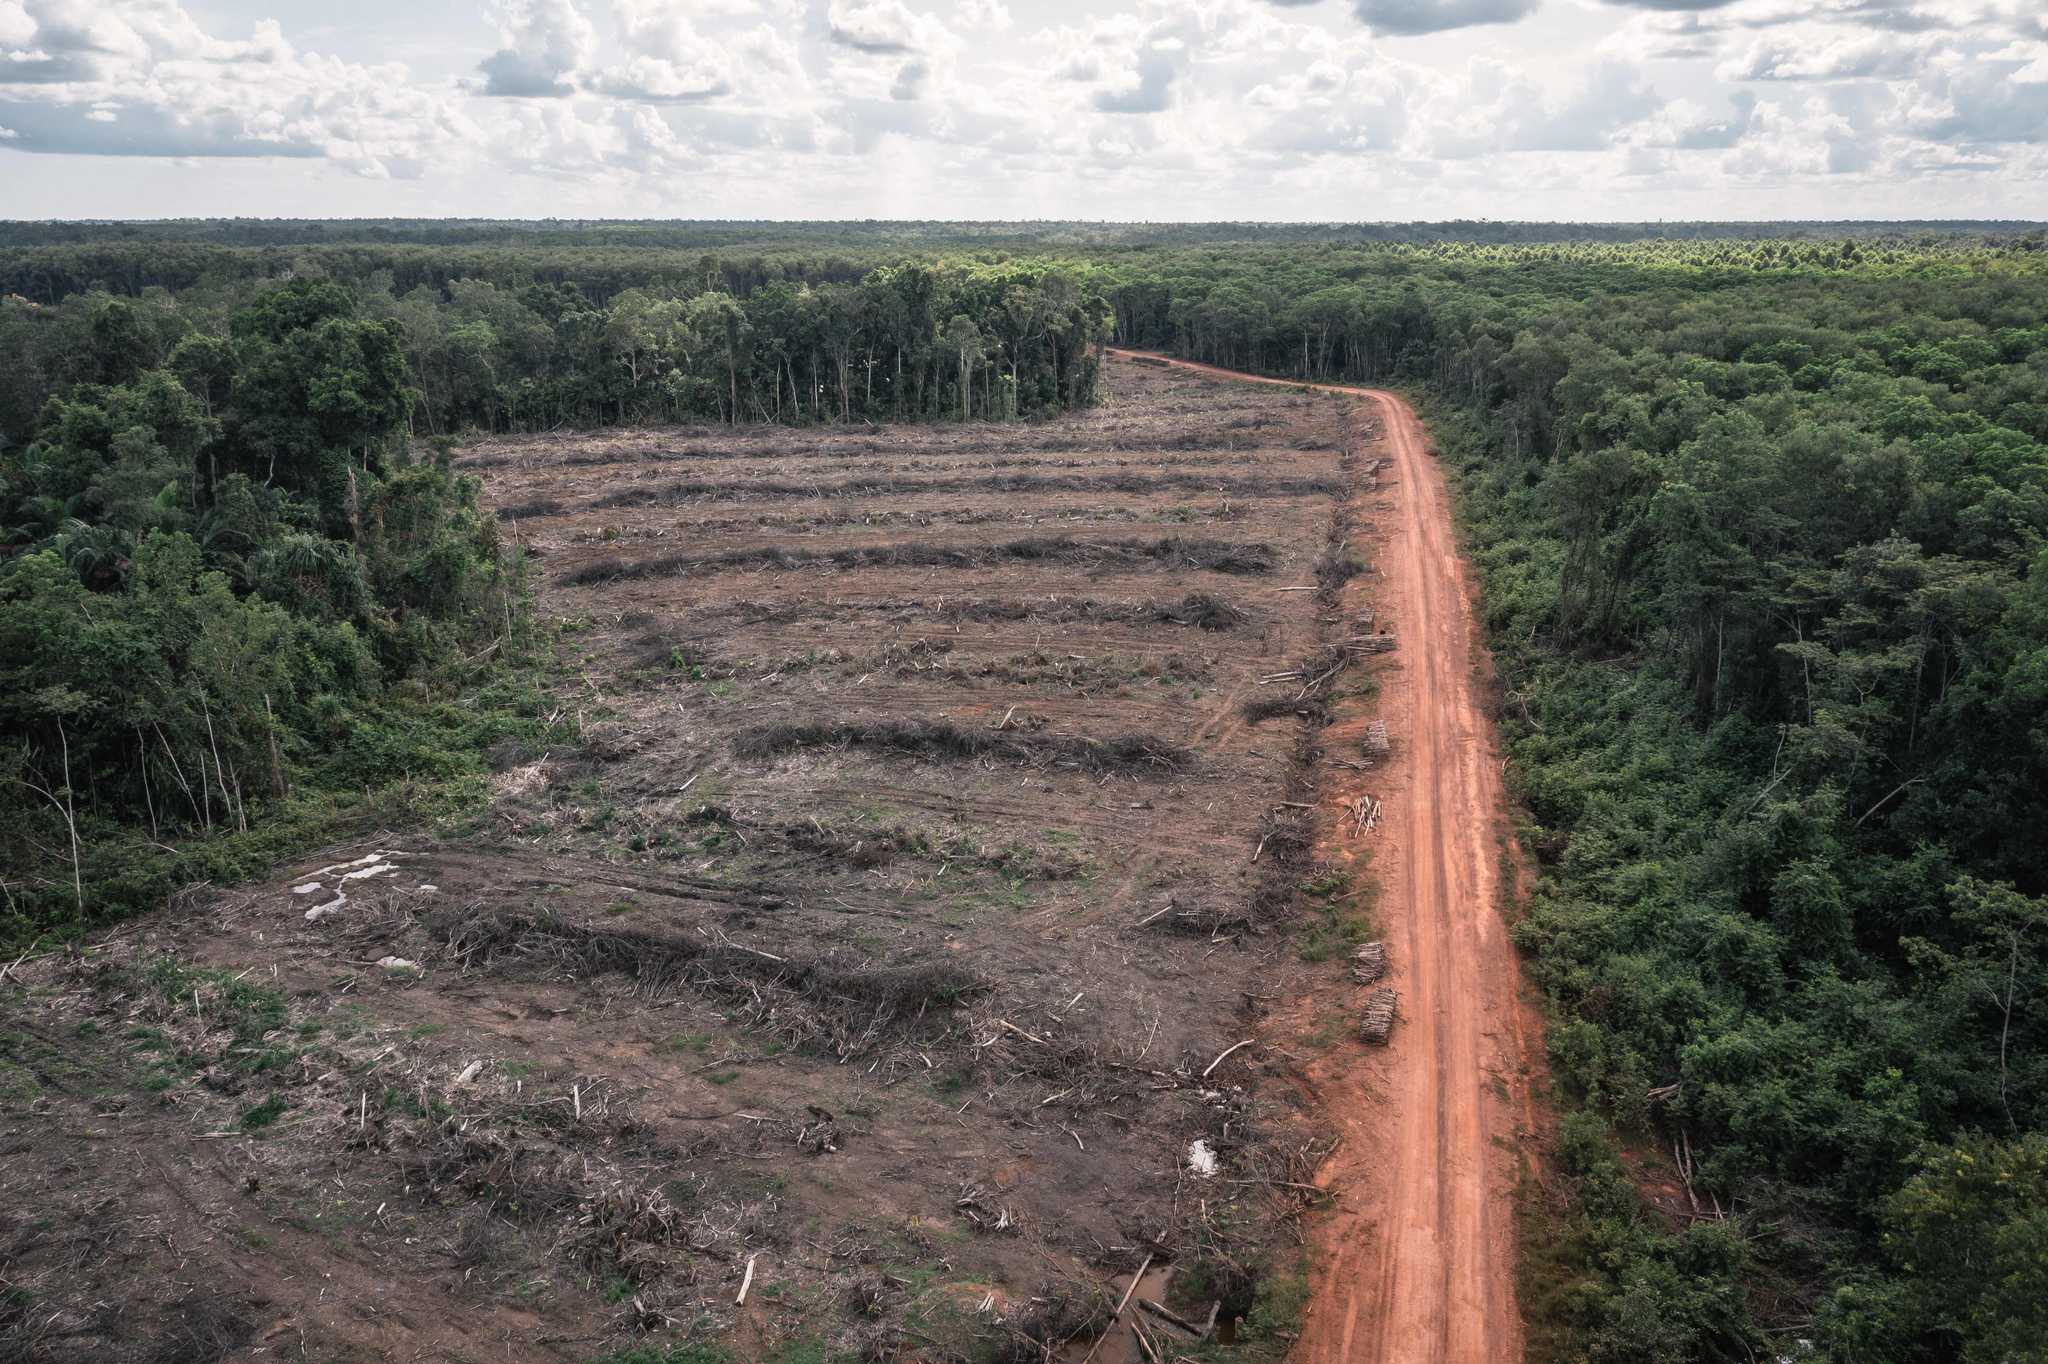 Medco sudah membongkar cukup luas banyak kawasan hutan yang menurut peta pemerintah Indonesia tergolong hutan “primer”. Sebagian besar area hutan ini masih lestari, belum terganggu oleh aktivitas manusia.